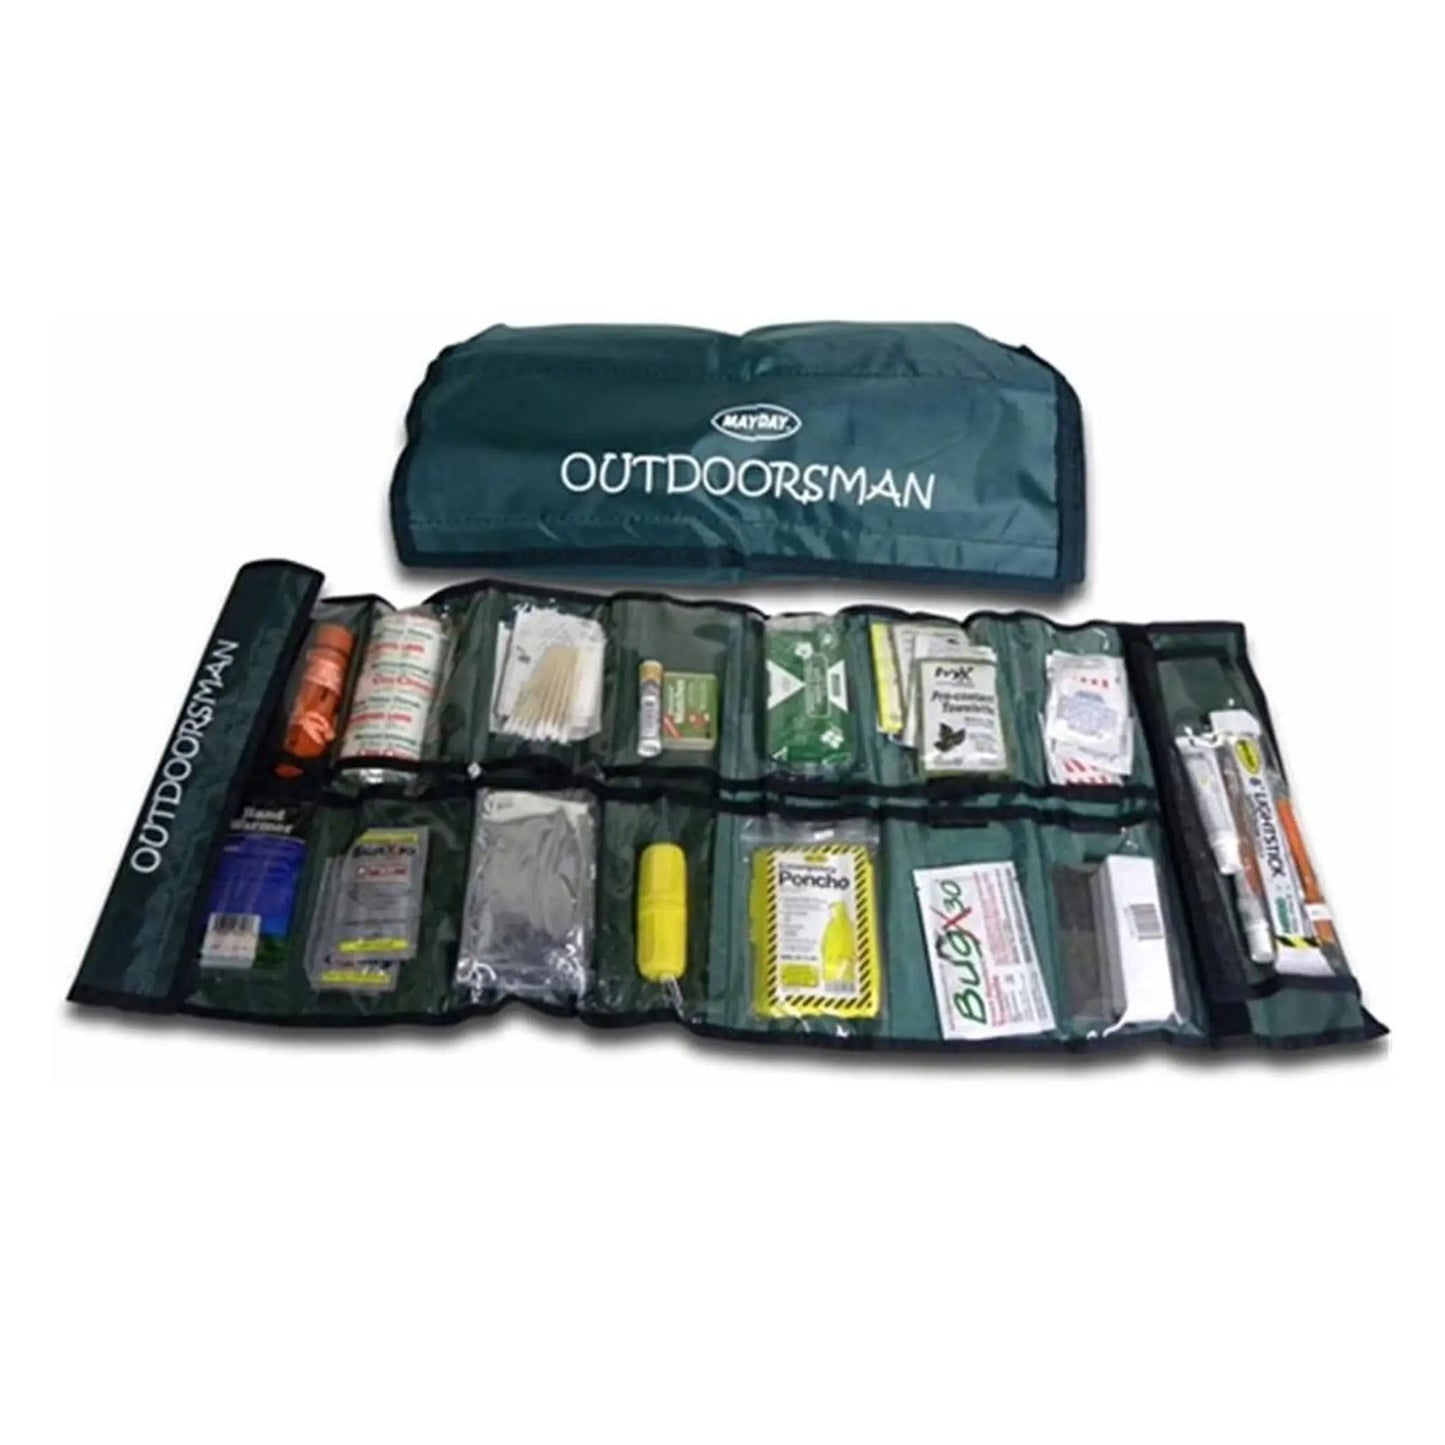 Outdoorsman Kit - First Aid Market